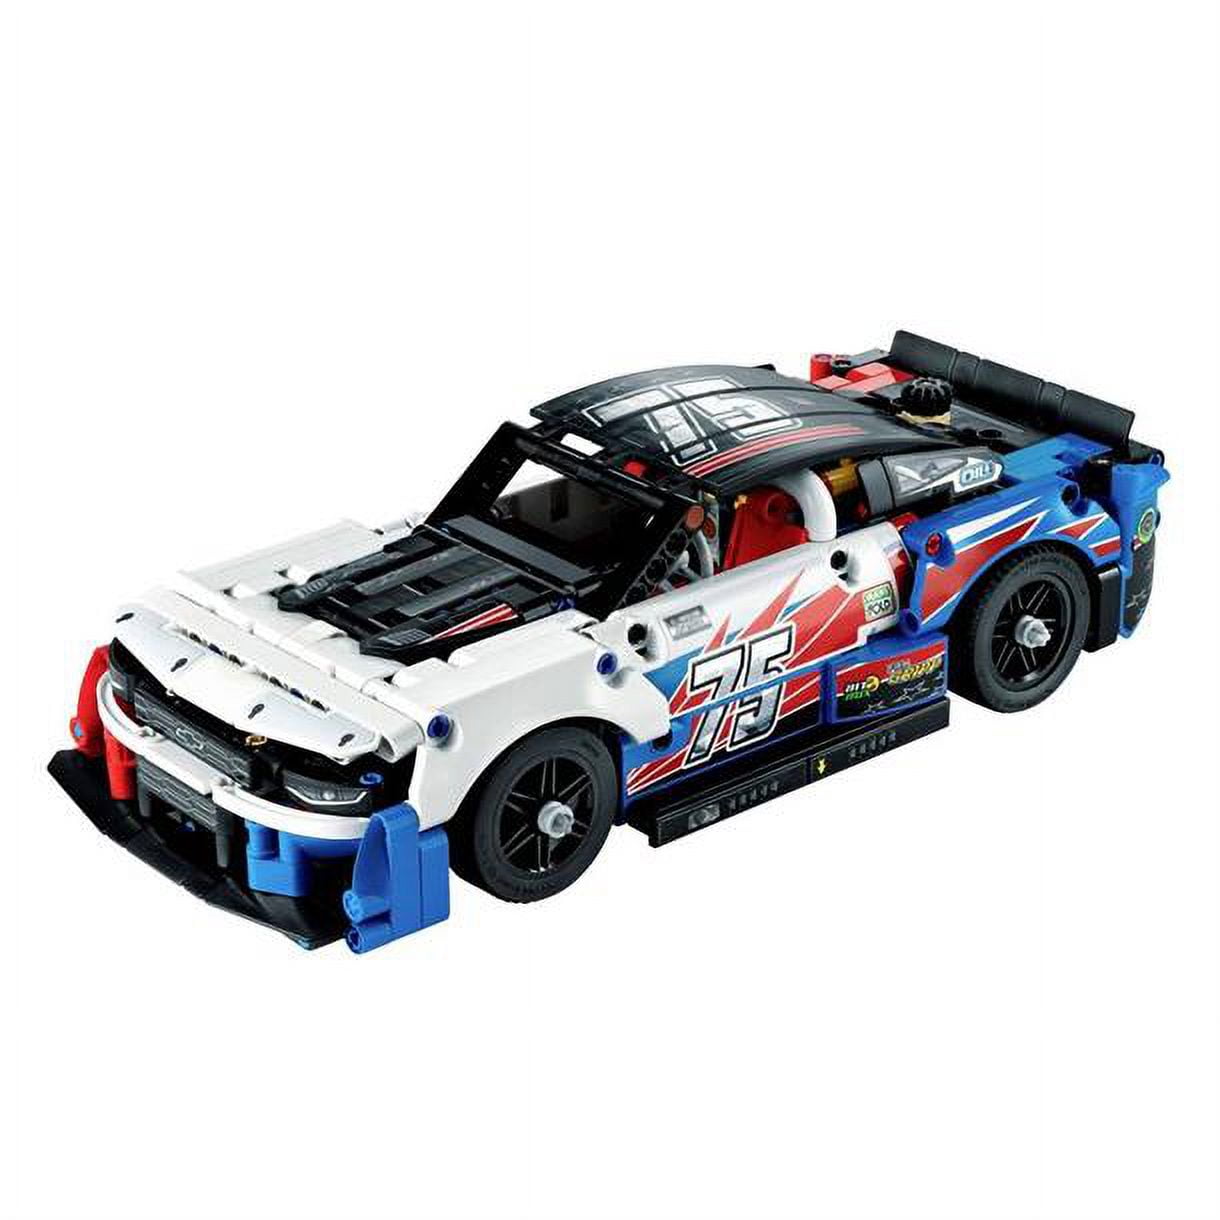 LEGO - Technic - Auto da Rally Top Gear Telecomandata - ePrice